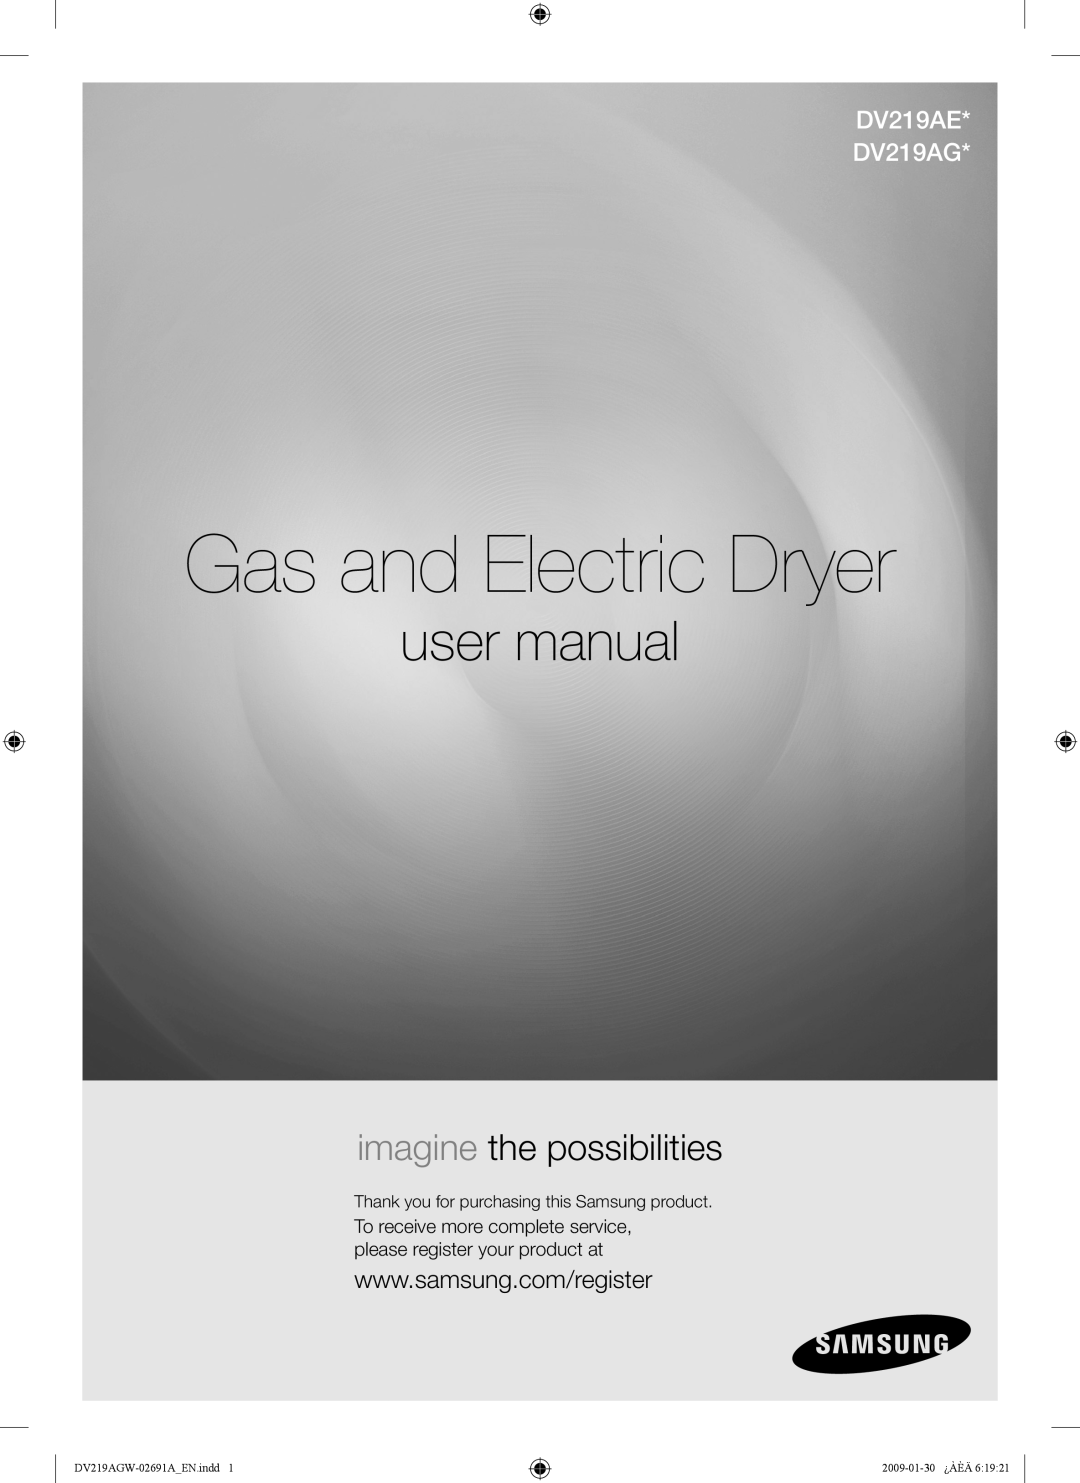 Samsung user manual imagine the possibilities, DV219AE DV219AG, Gas and Electric Dryer, DV219AGW-02691AEN.indd 